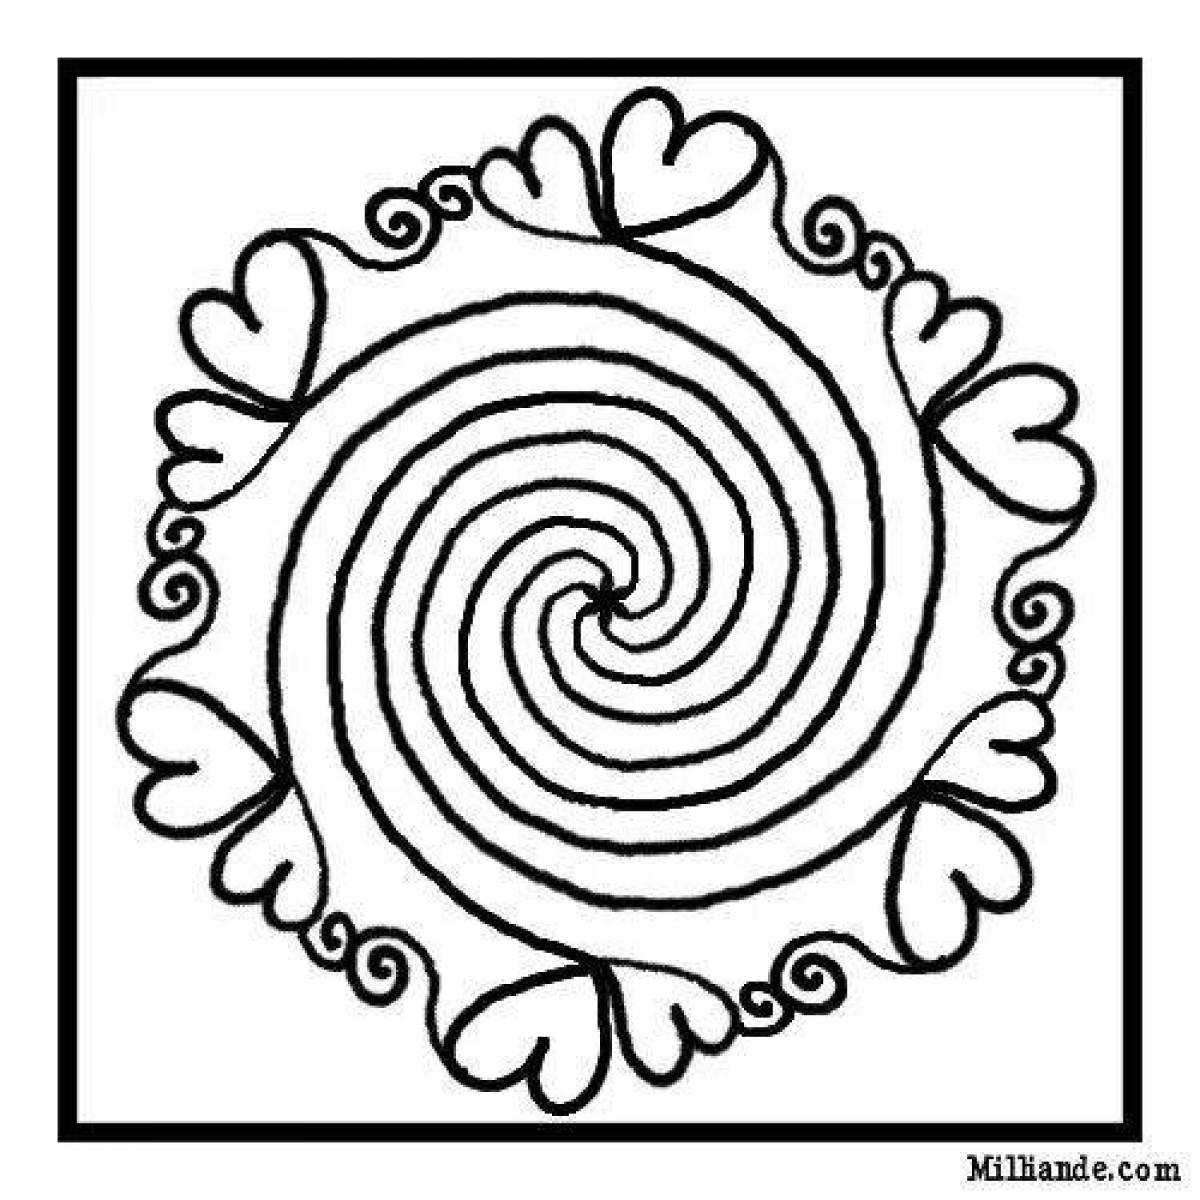 Dazzling coloring hidden spiral pattern